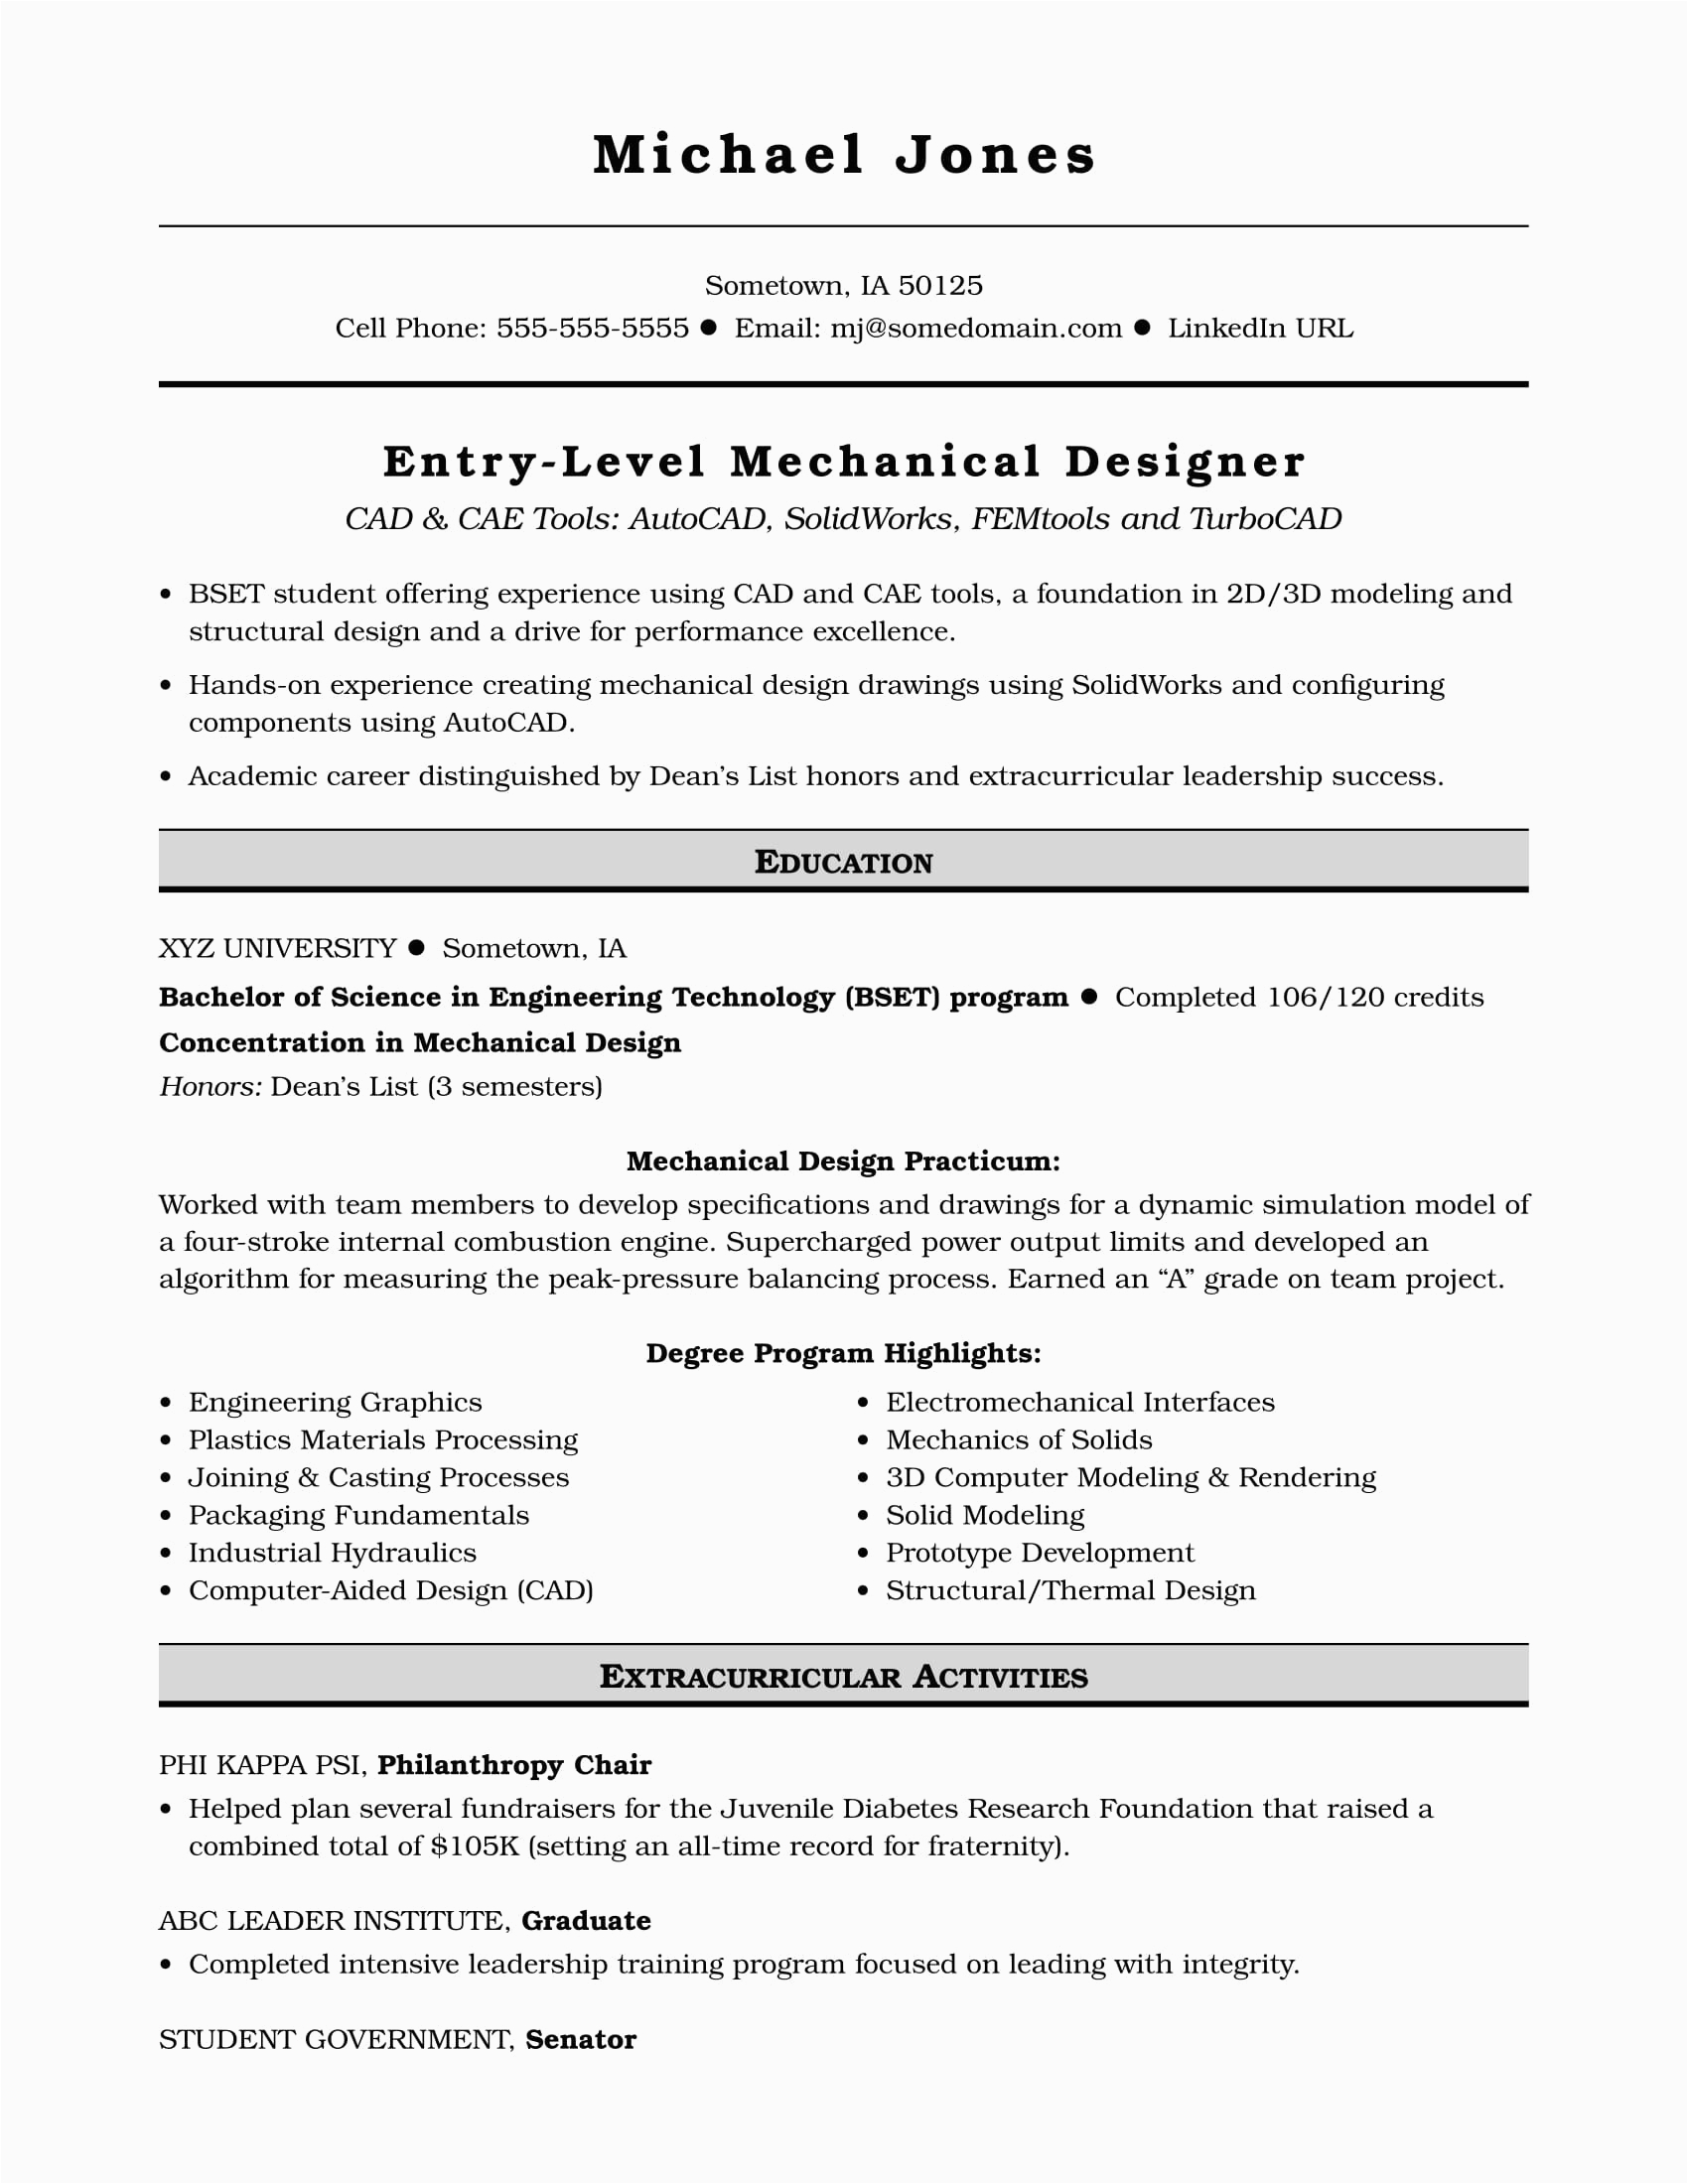 Mechanical Engineering Resume Samples Entry Level Sample Resume for An Entry Level Mechanical Designer